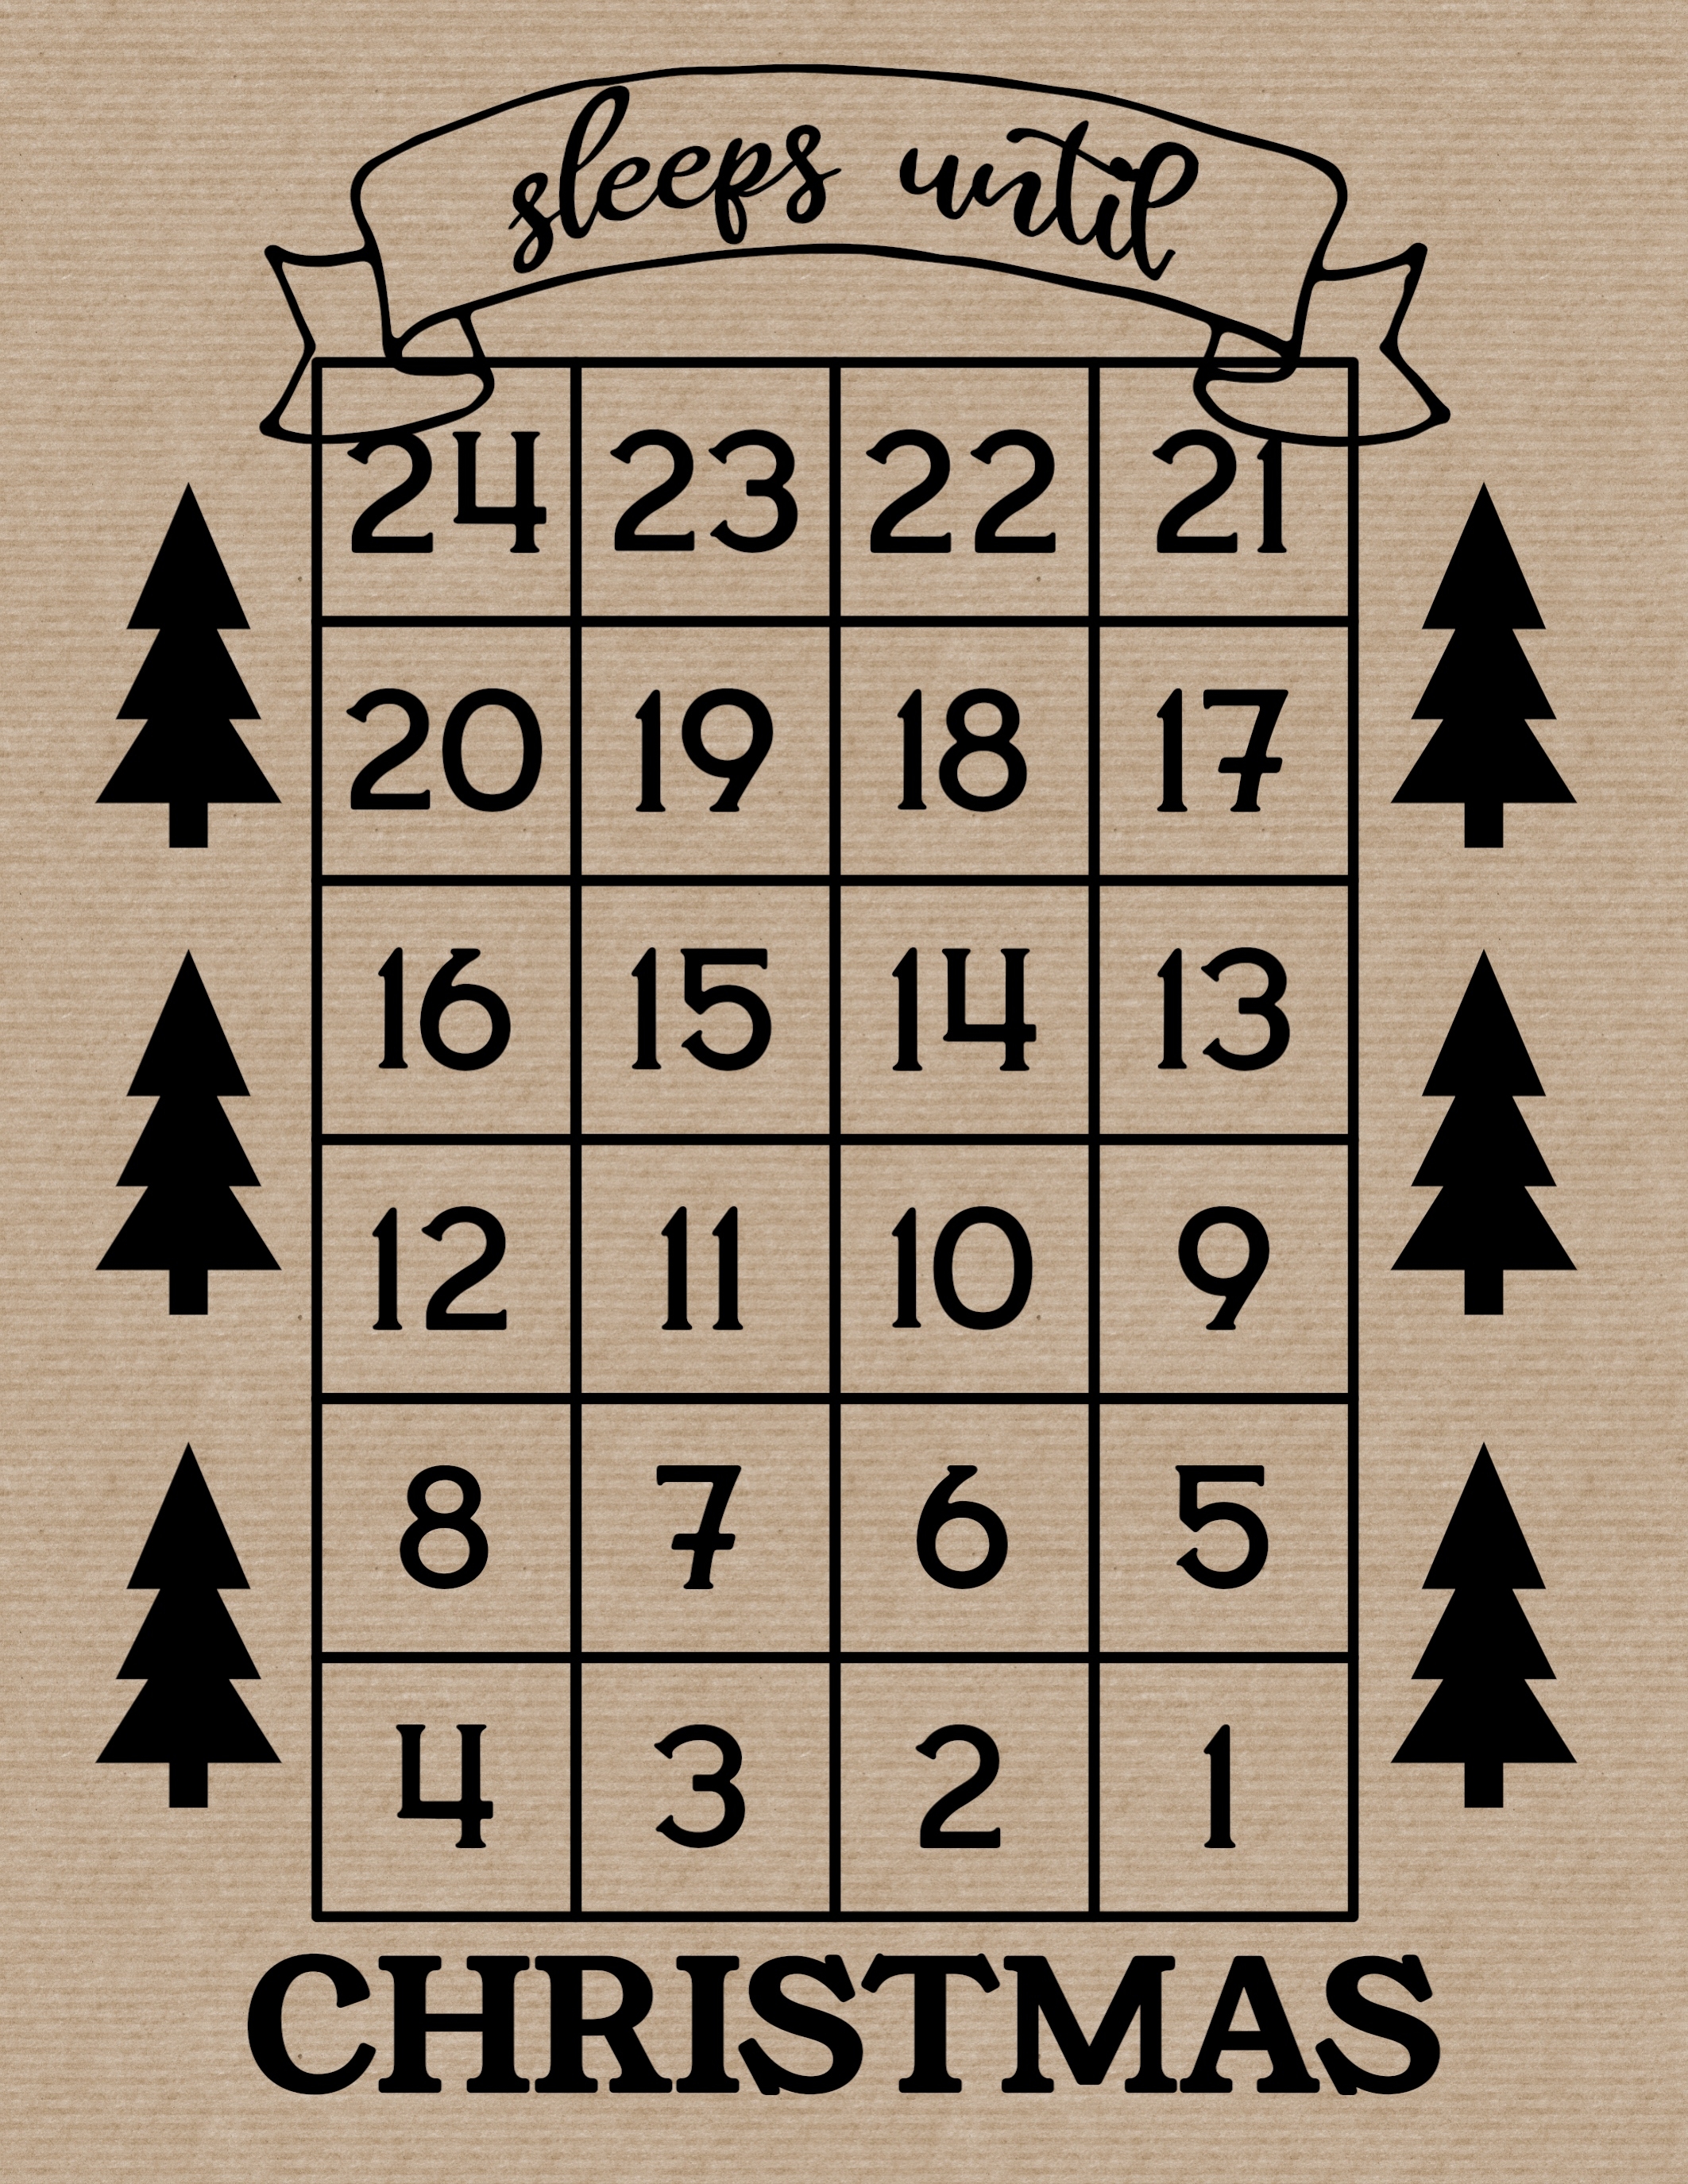 How Many Days Until Christmas Free Printable - Paper Trail Perky Printable Christmas Countdown Calendar 2020